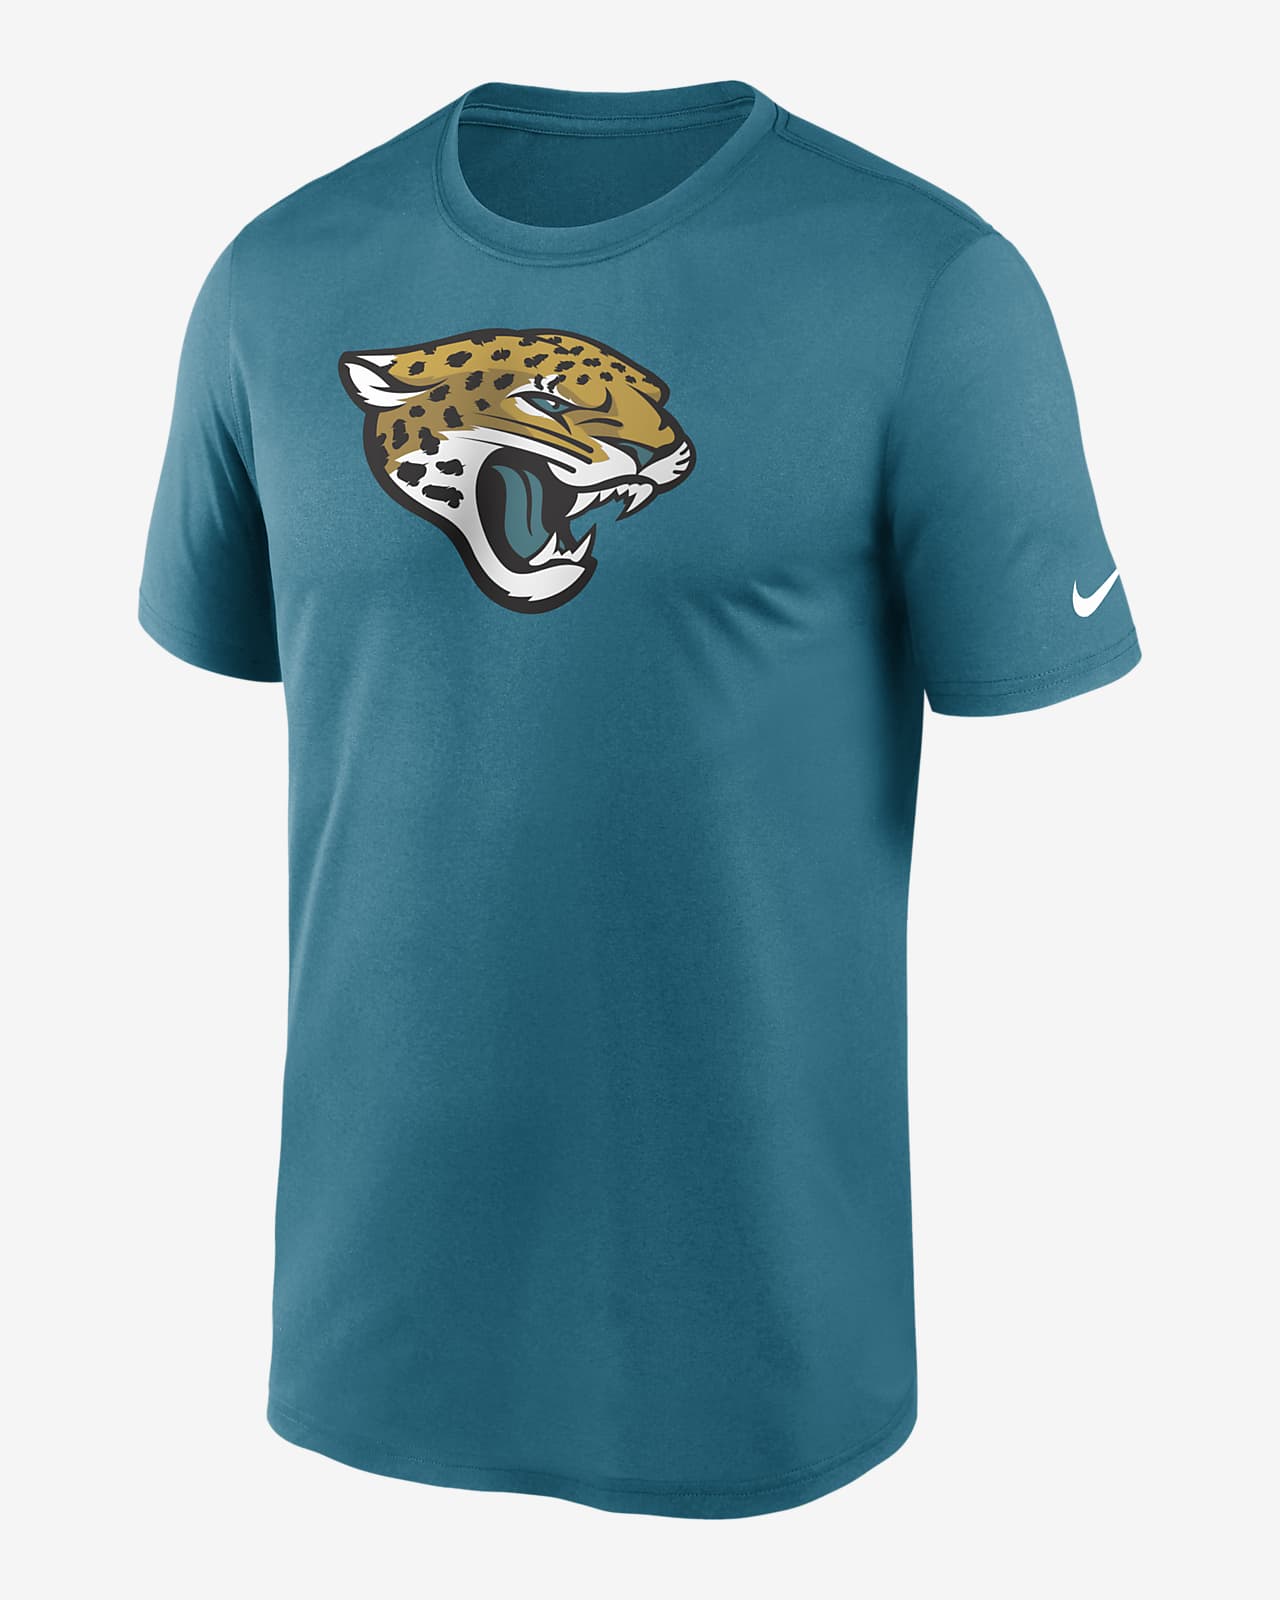 Nike Dri-FIT Logo Legend (NFL Jacksonville Jaguars) Men's T-Shirt